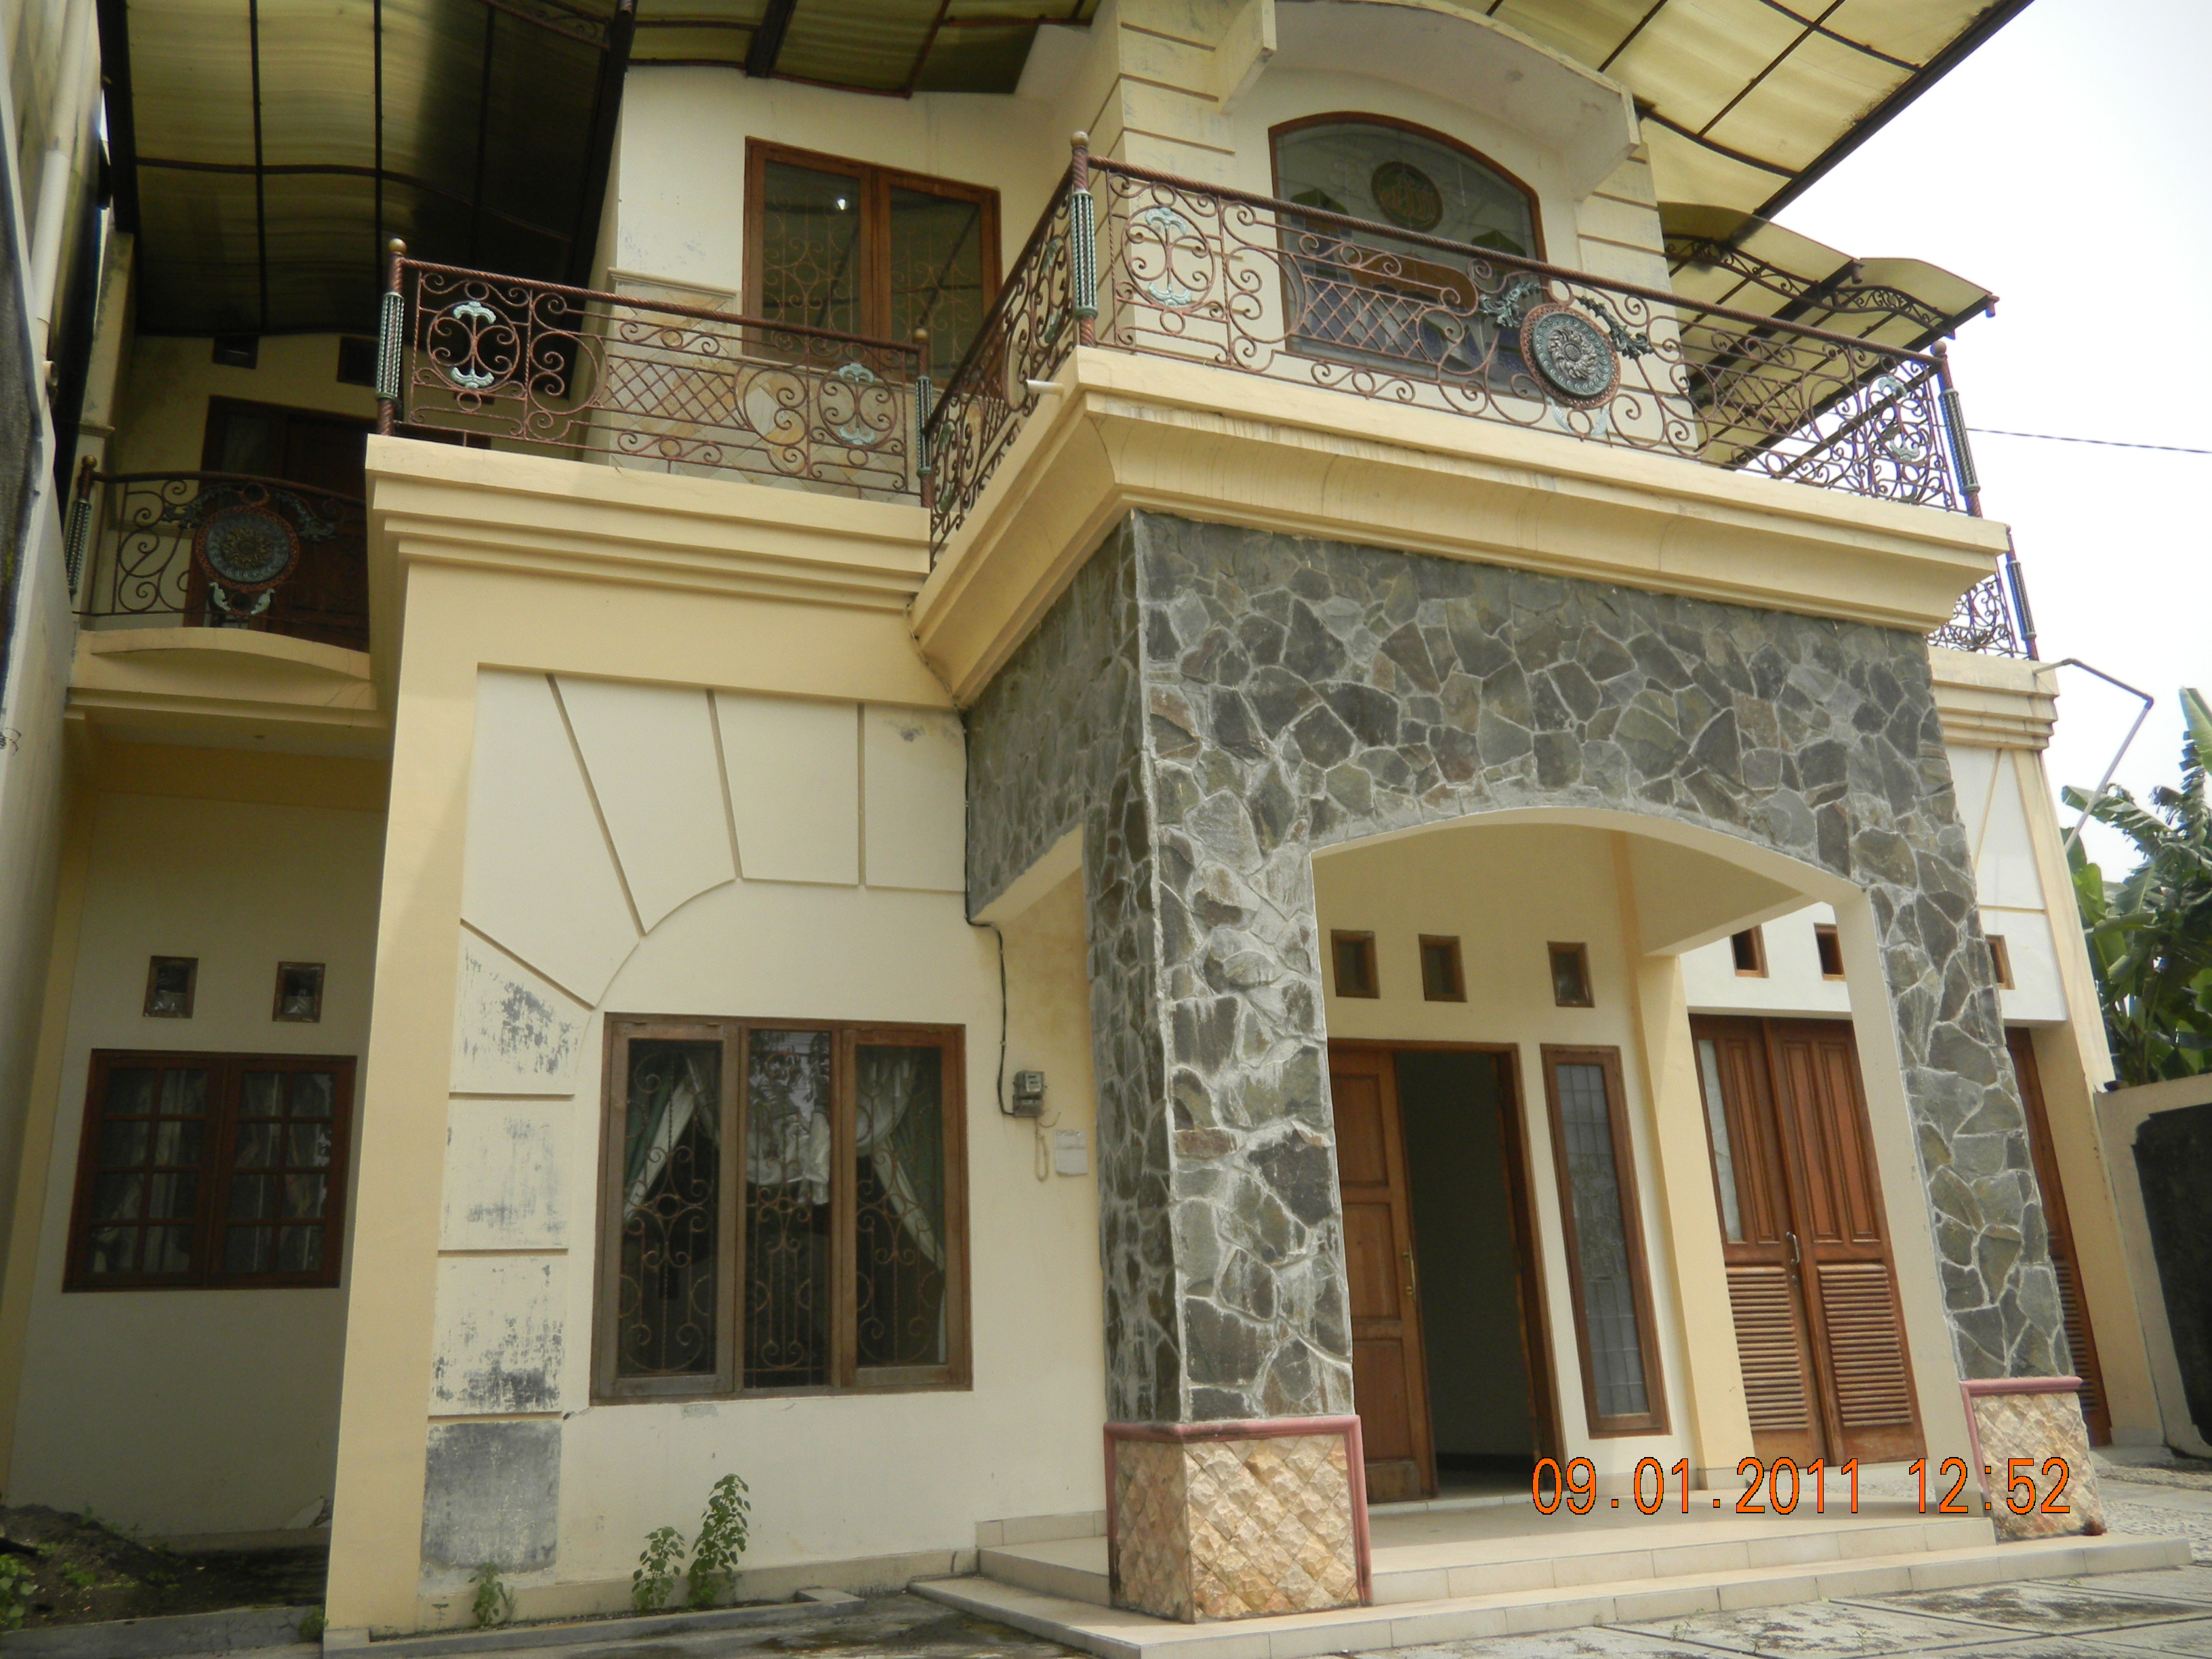 Disewakan Rumah 2 lantai di Wojo Yogyakarta Jual 